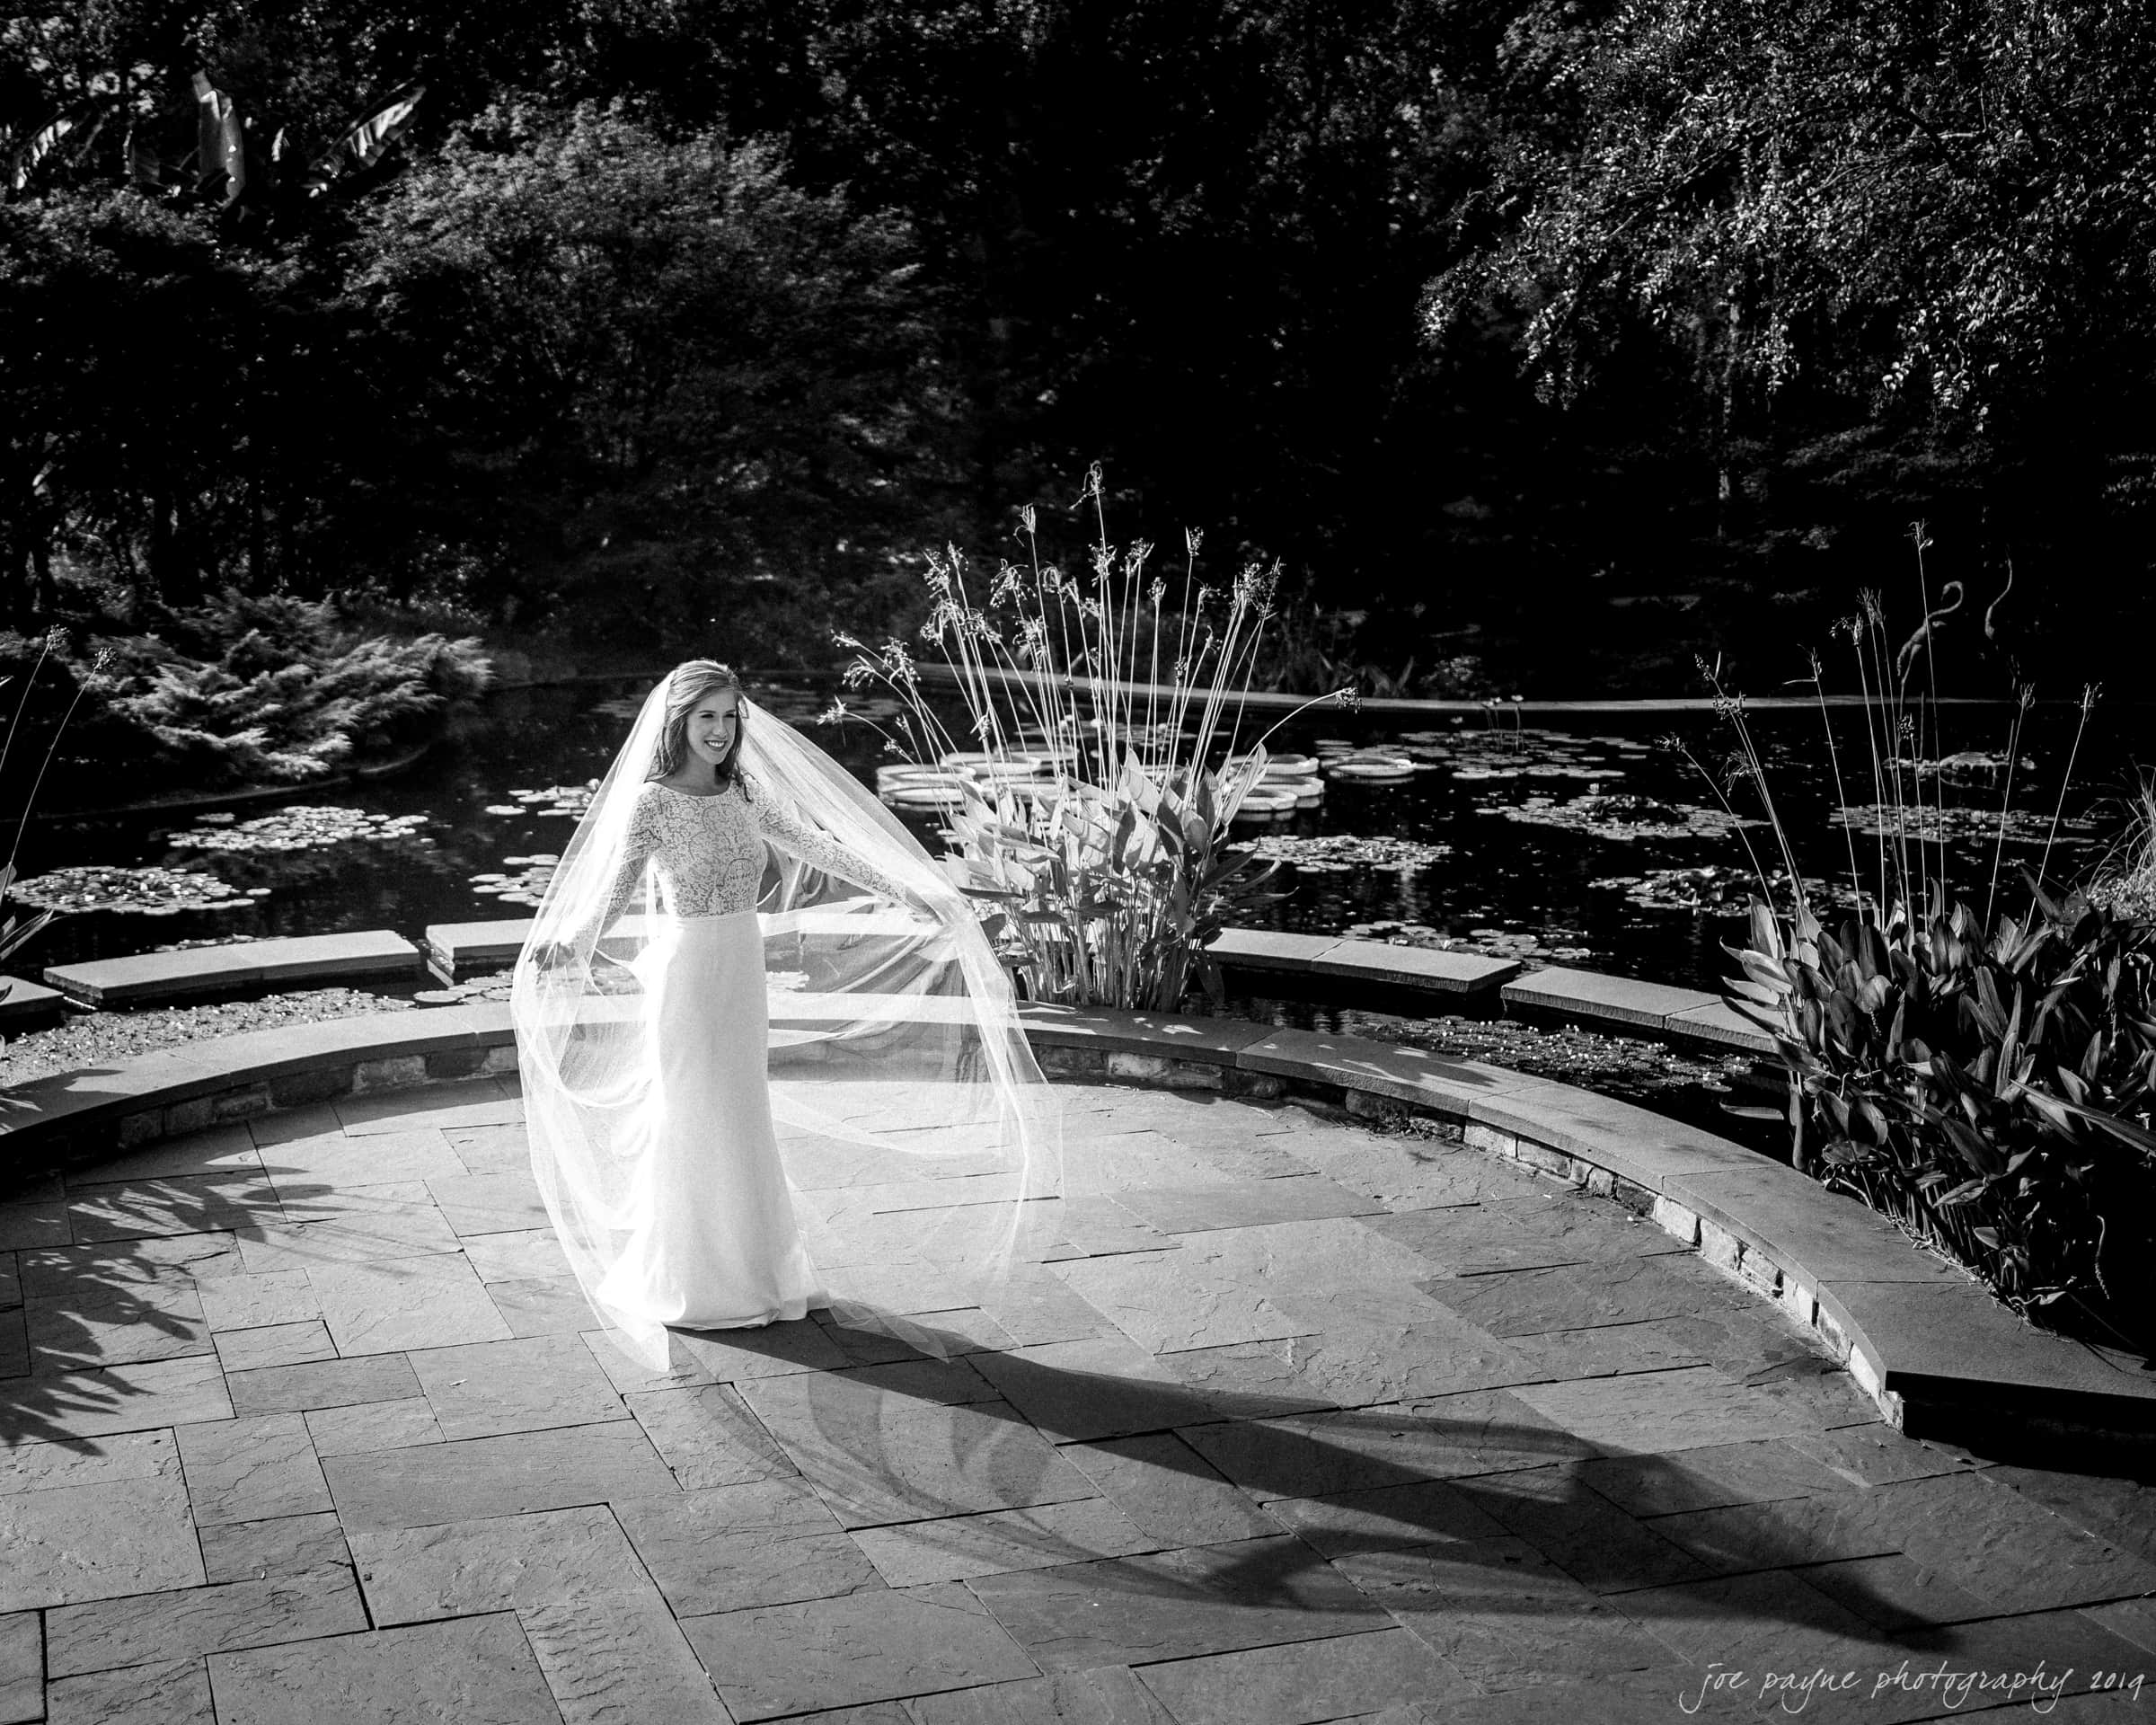 duke gardens wedding photography - megan's bridal session